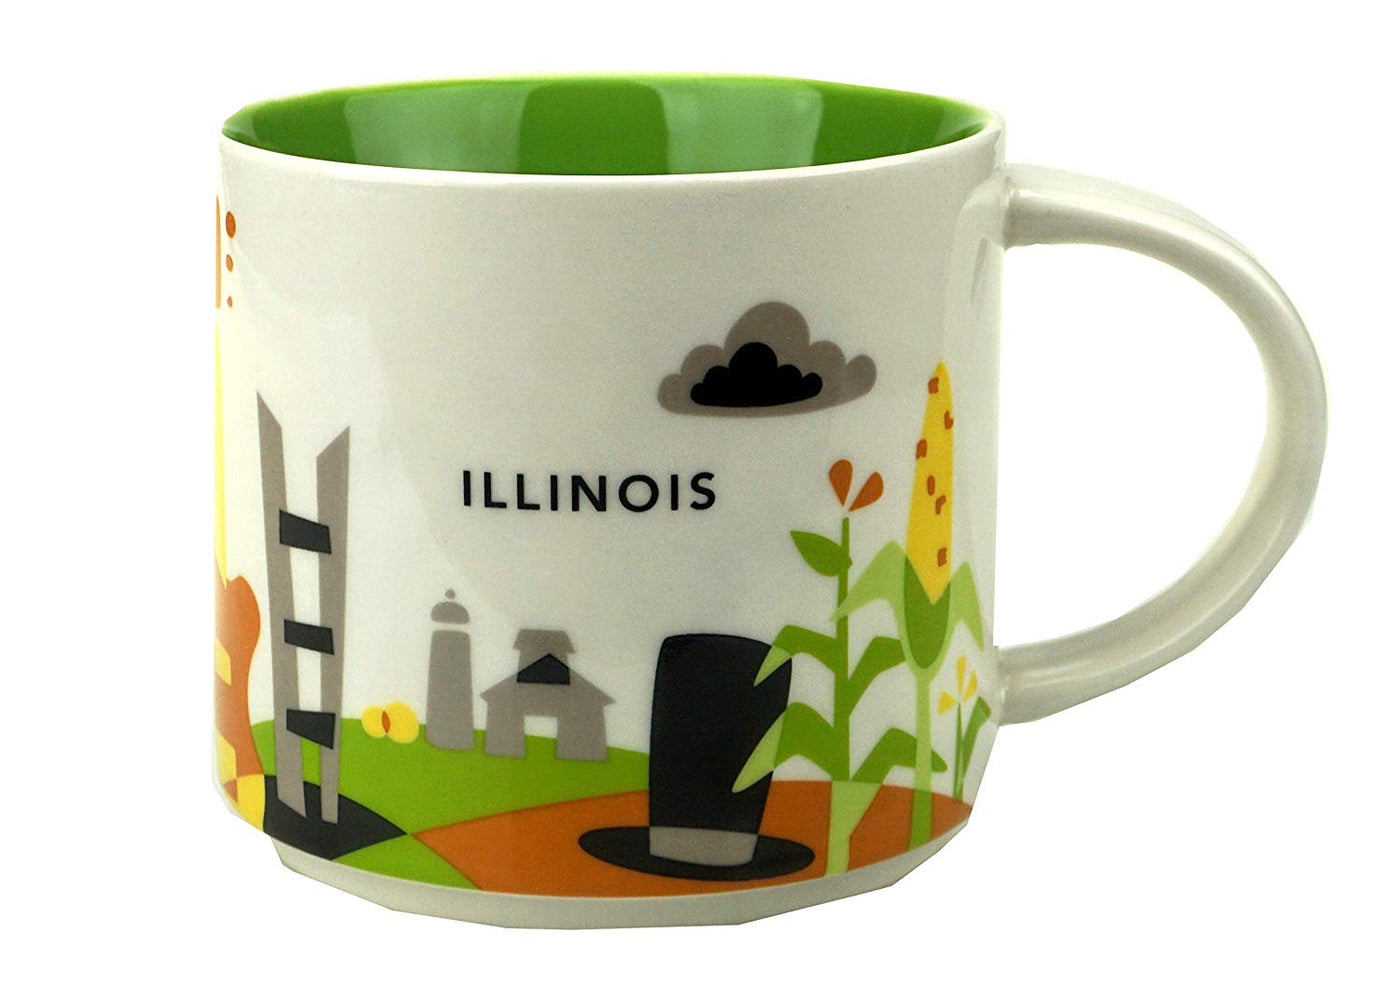 Starbucks You Are Here Illinois Ceramic Coffee Mug New with Box